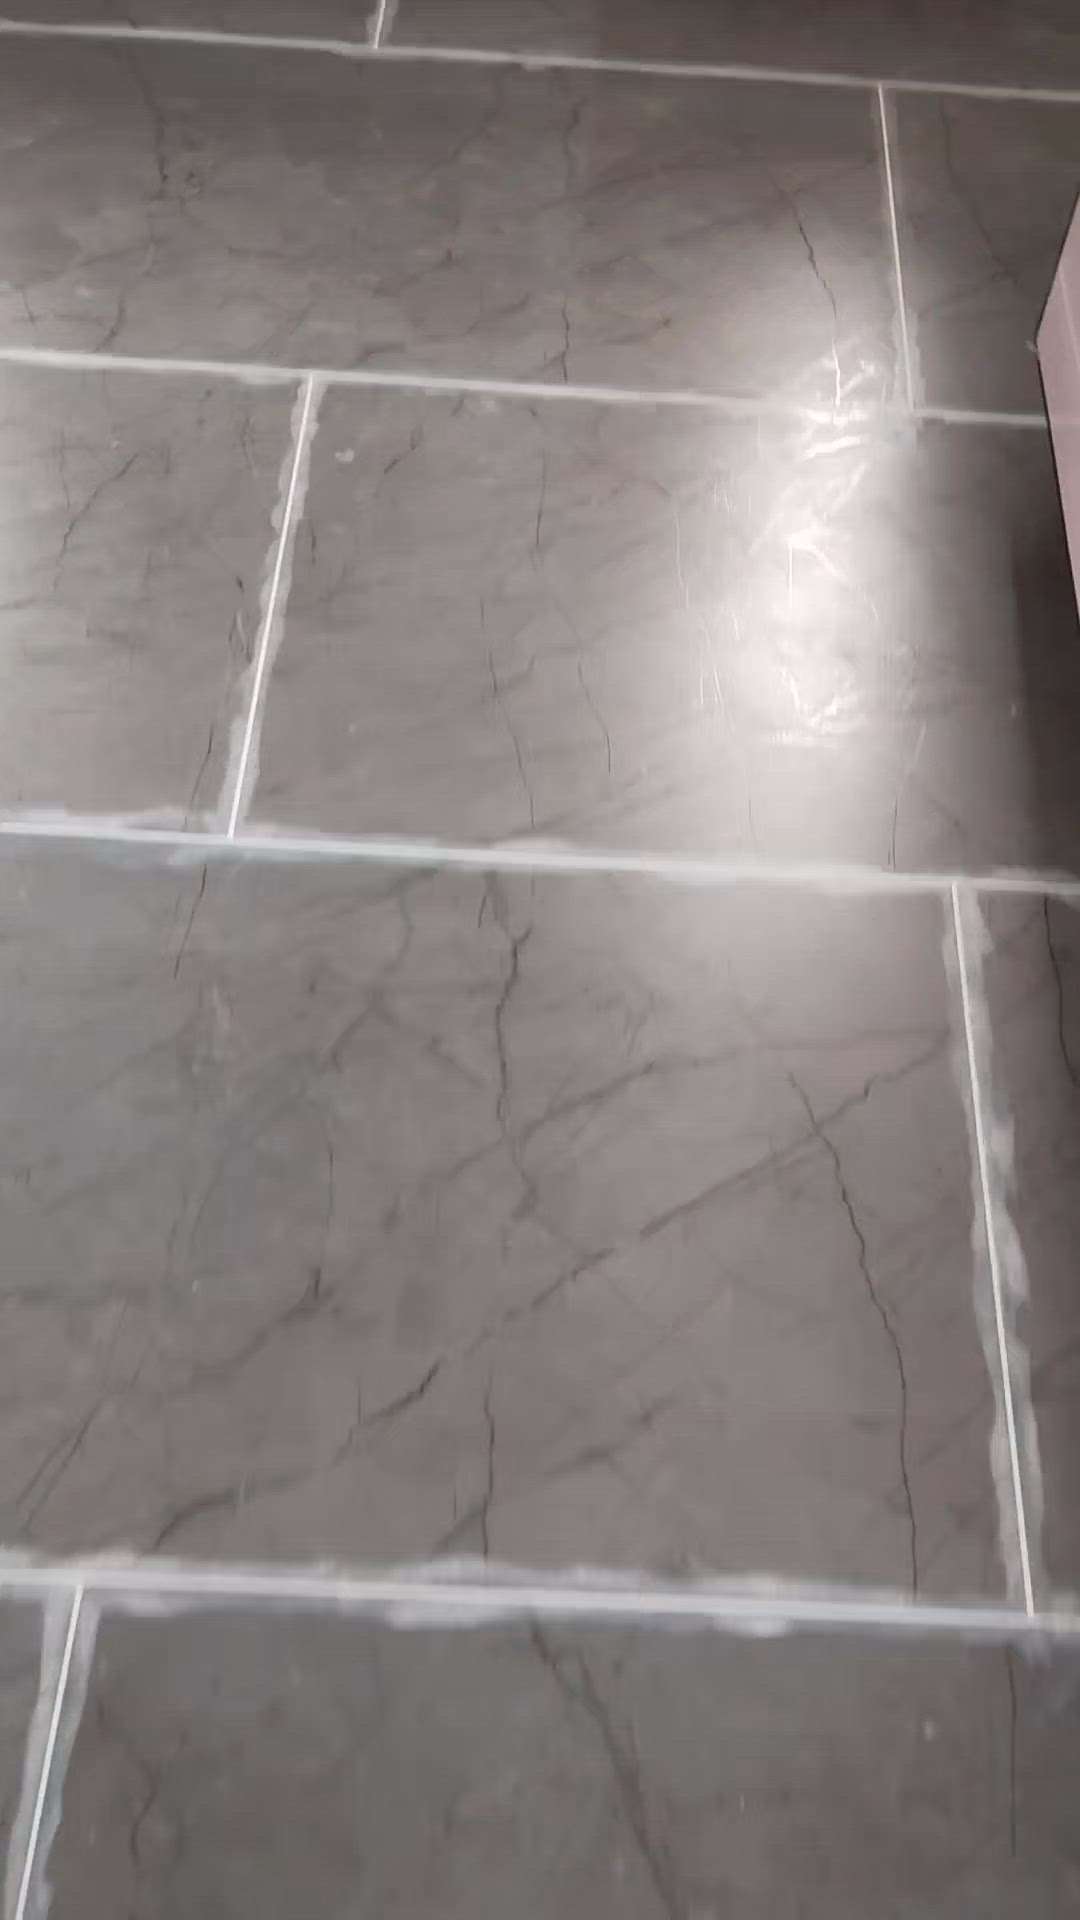 white epoxy   #FlooringTiles  #GraniteFloors  #HouseDesigns  #tile_work  #mallugram